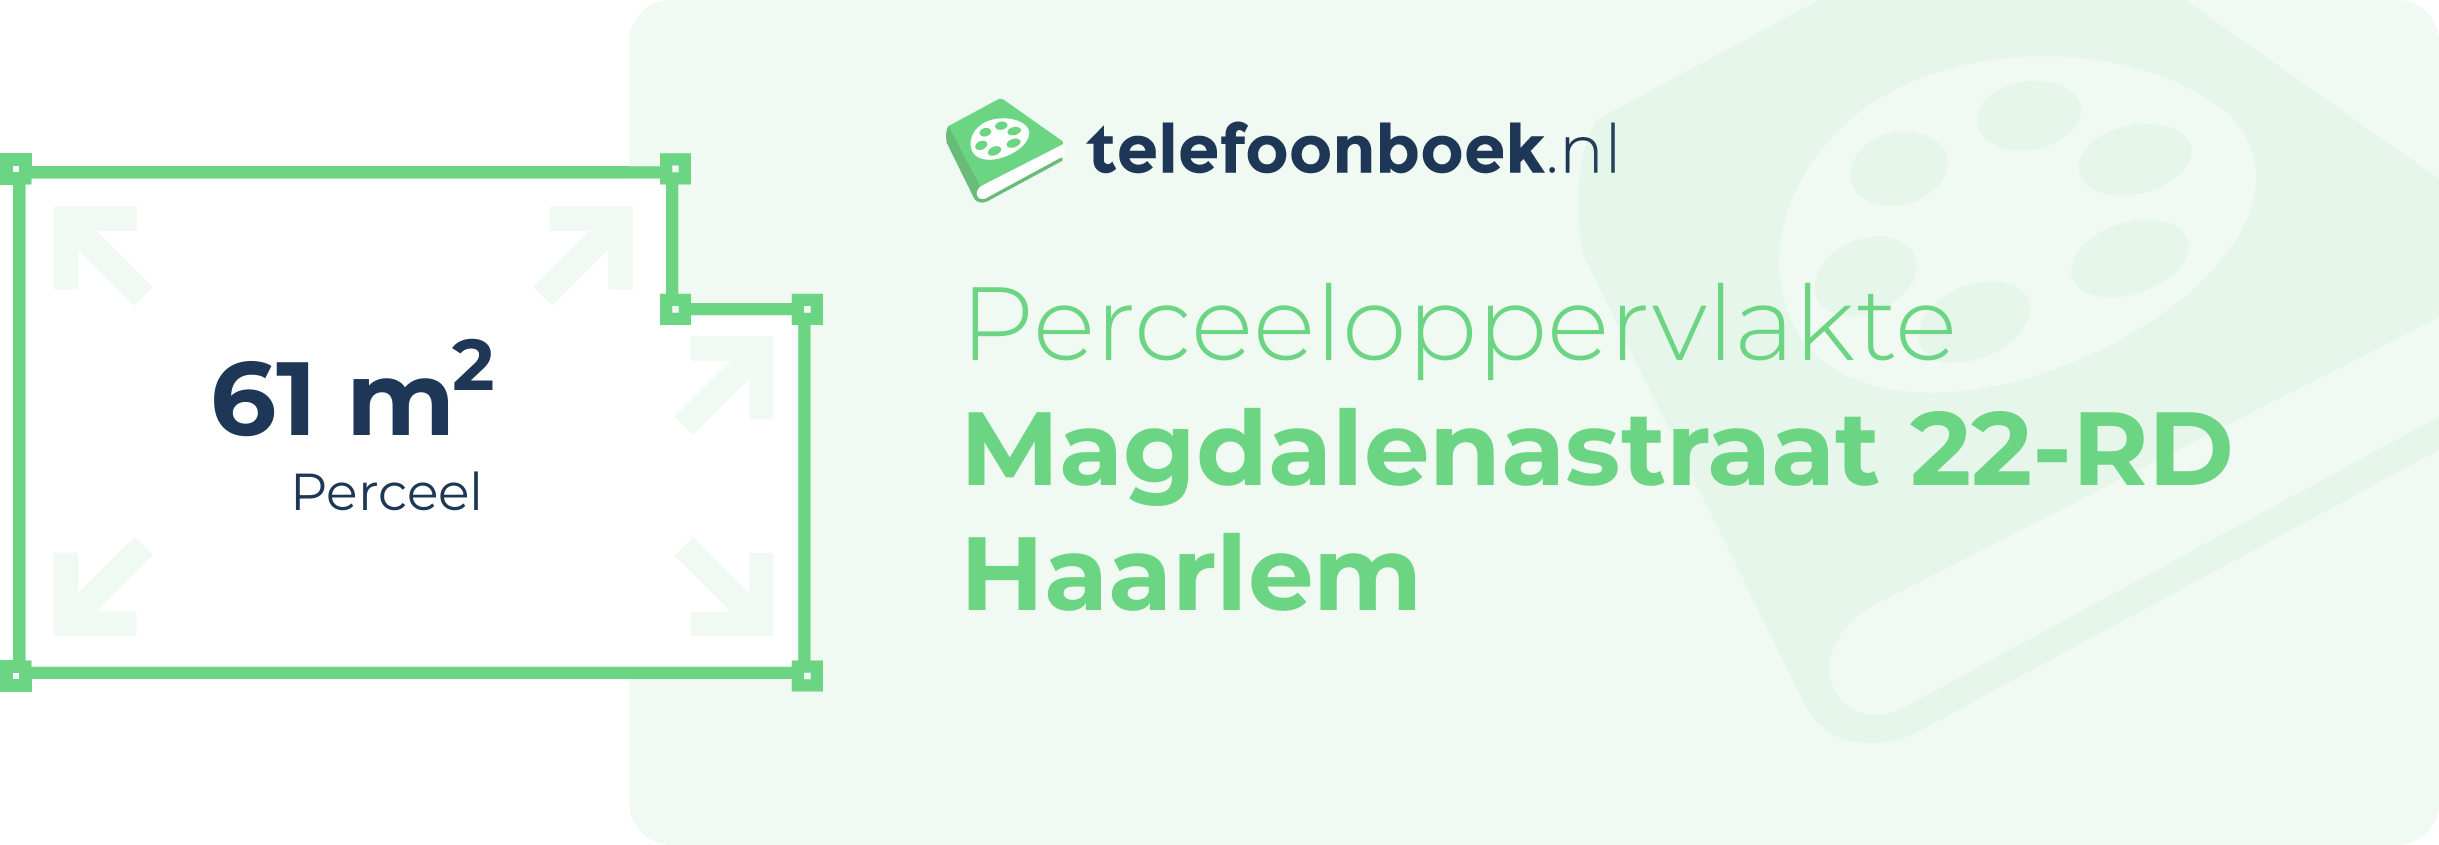 Perceeloppervlakte Magdalenastraat 22-RD Haarlem